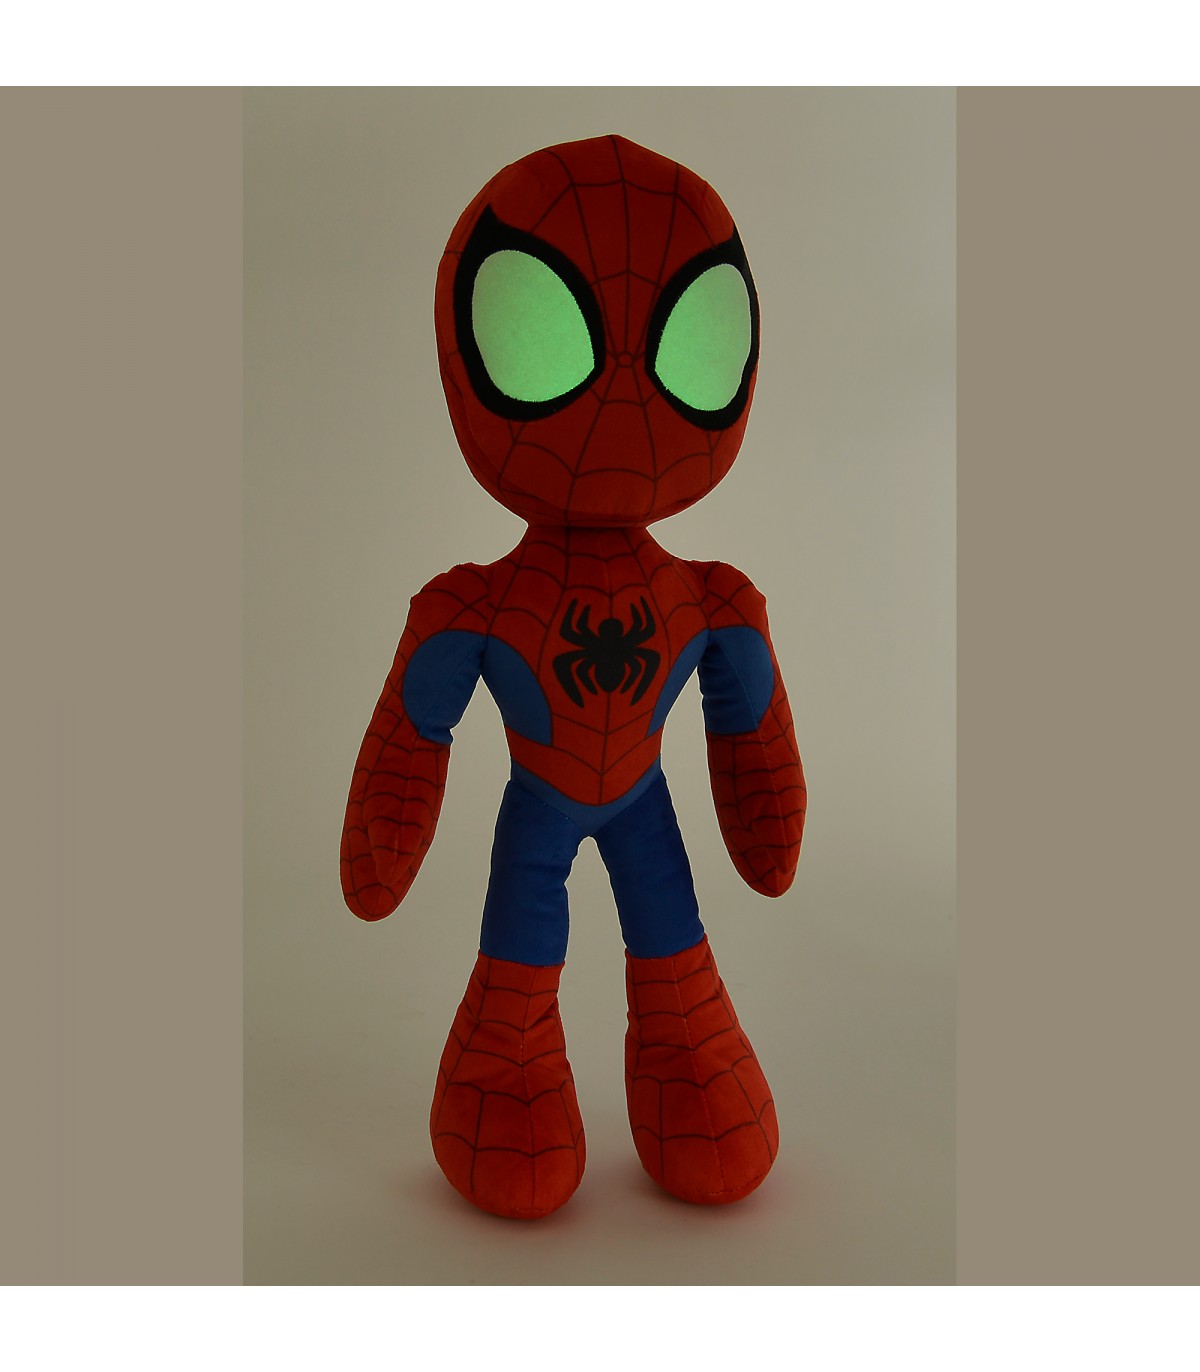 Peluche Spiderman 50cm